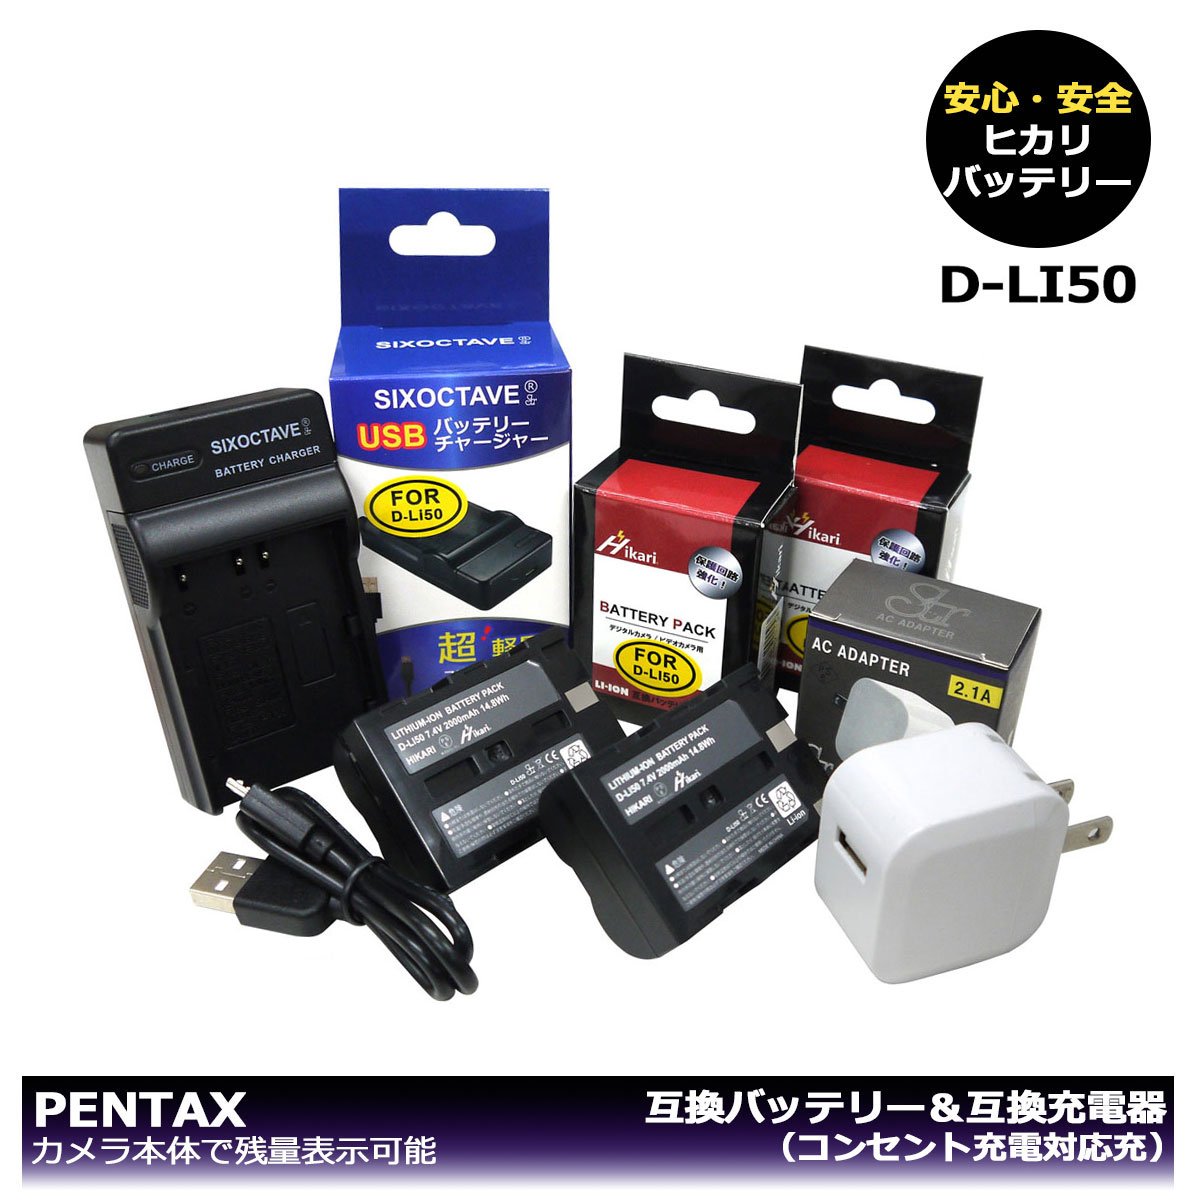 PENTAX D-LI50 コンセント充電可能！【送料無料】 大容量シリーズ 互換バッテリー 2個と 互換チャージャー 1個とACアダプター1個の4点セット K10 / K10D / K10D GP / K10D Grand Prix / K20D / Dimage A1 / Dimage A2 / Dynax 5D / Dynax 7D / Maxxum 5D (A2.1)